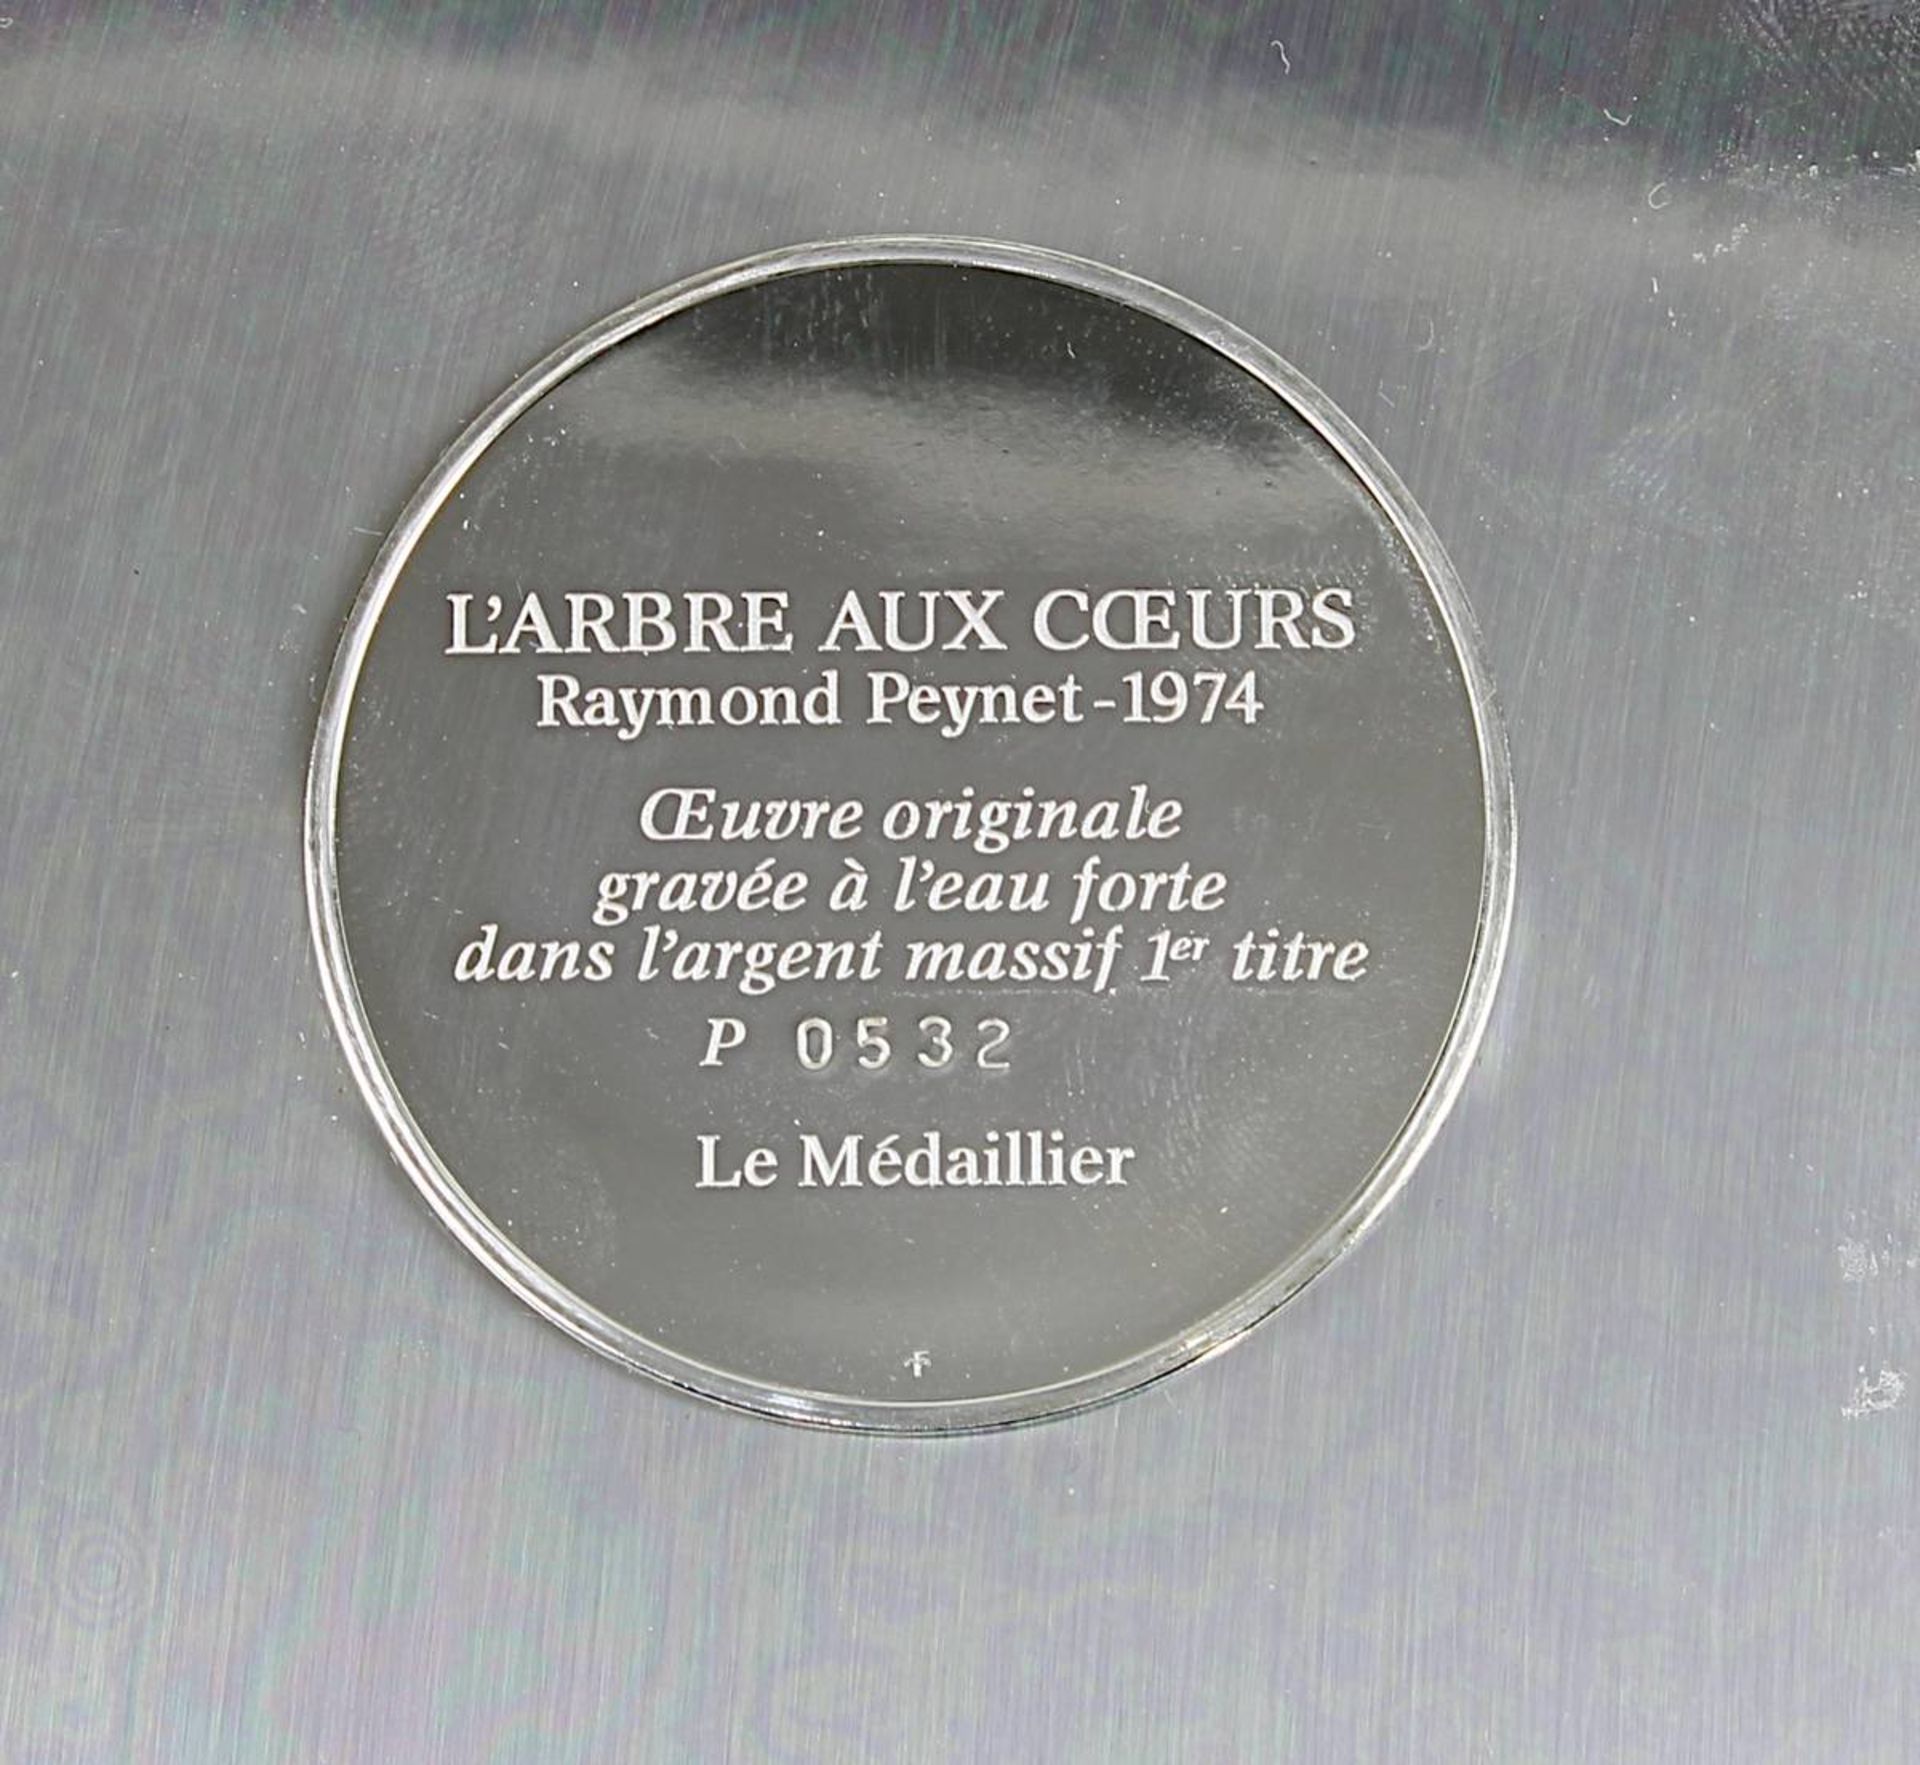 Raymond Peynet (Paris 1908 - 1999 Mougins), Silber-Künstlerteller "L'Arbre aux Coeurs", 1974, - Image 2 of 2